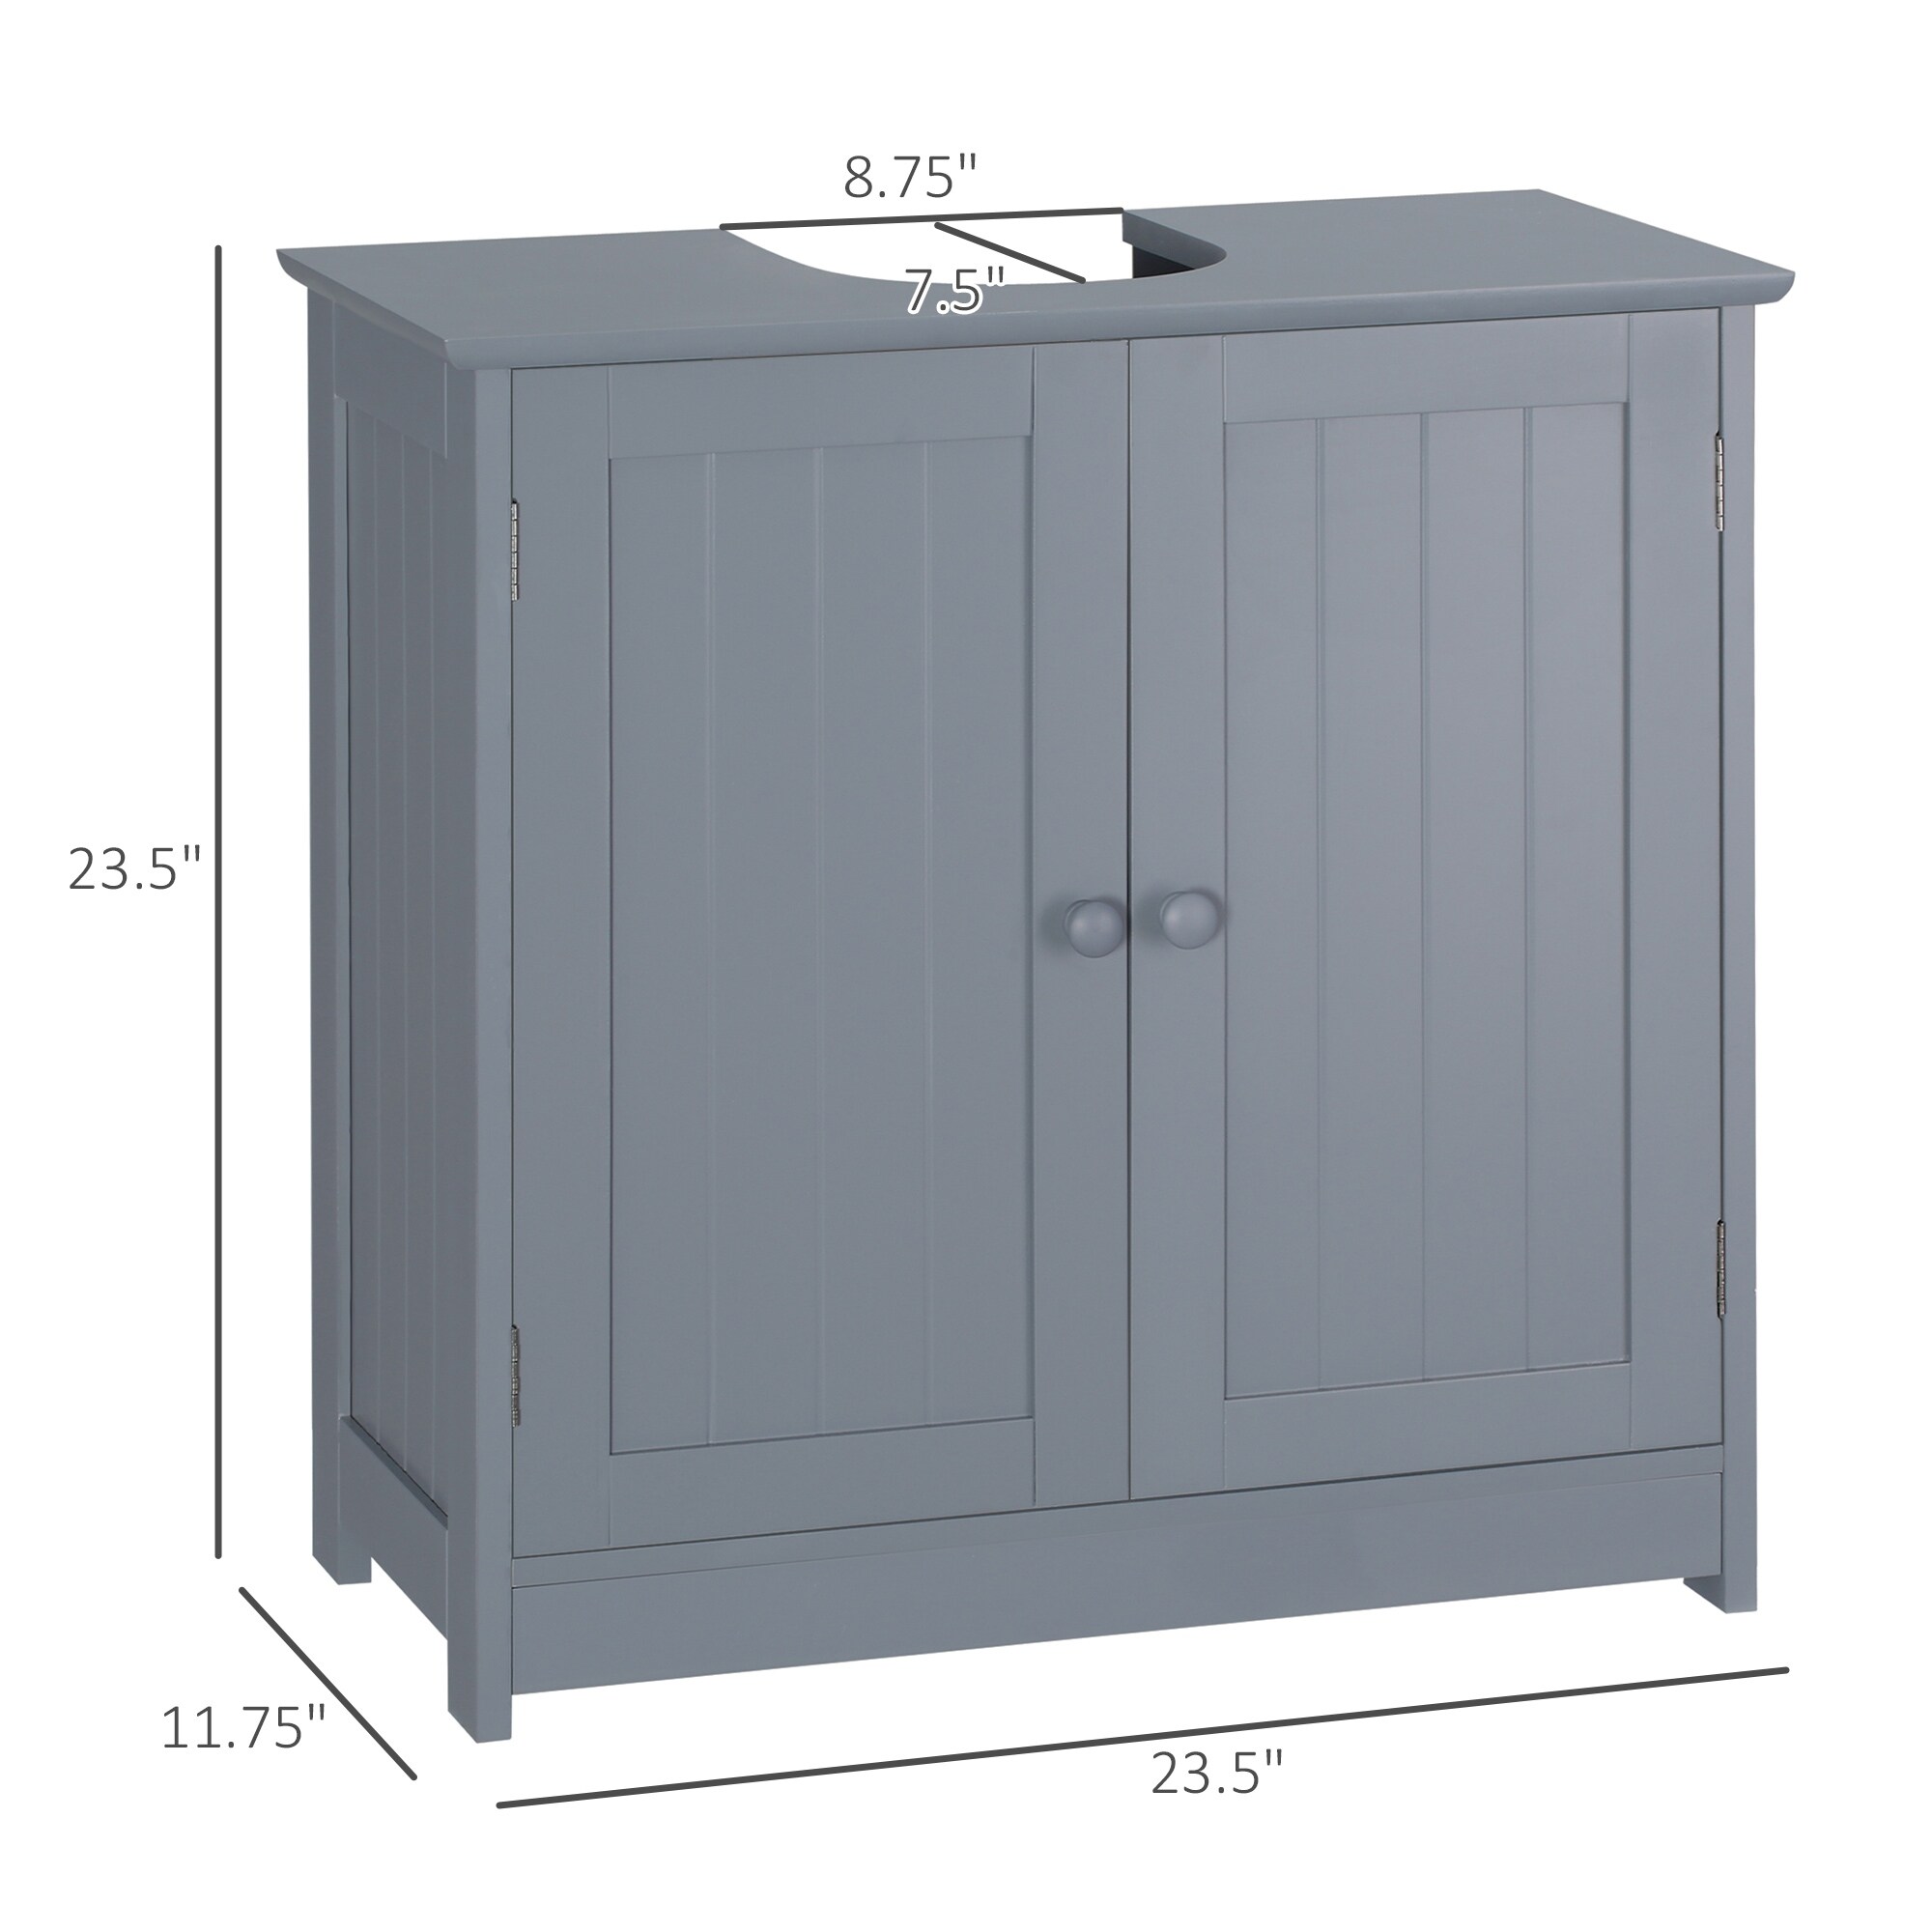 https://ak1.ostkcdn.com/images/products/is/images/direct/29330d67f910e5e61d65dfaf111007c1e65cf60c/HOMCOM-Under-Sink-Bathroom-Cabinet-with-2-Doors-and-Shelf%2C-Pedestal-Sink-Bathroom-Vanity-Furniture.jpg